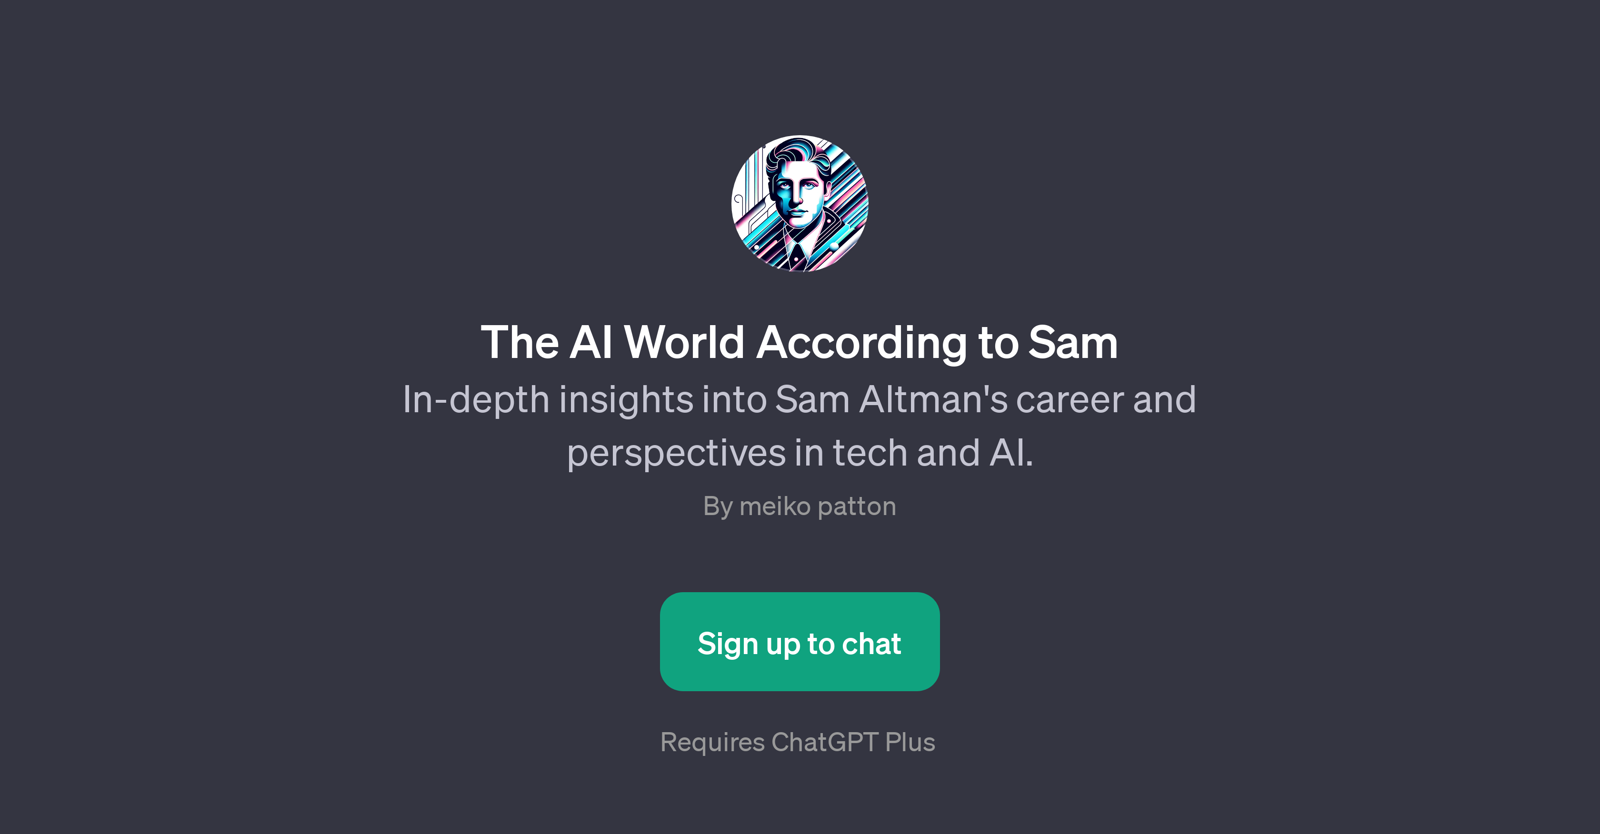 The AI World According to Sam website